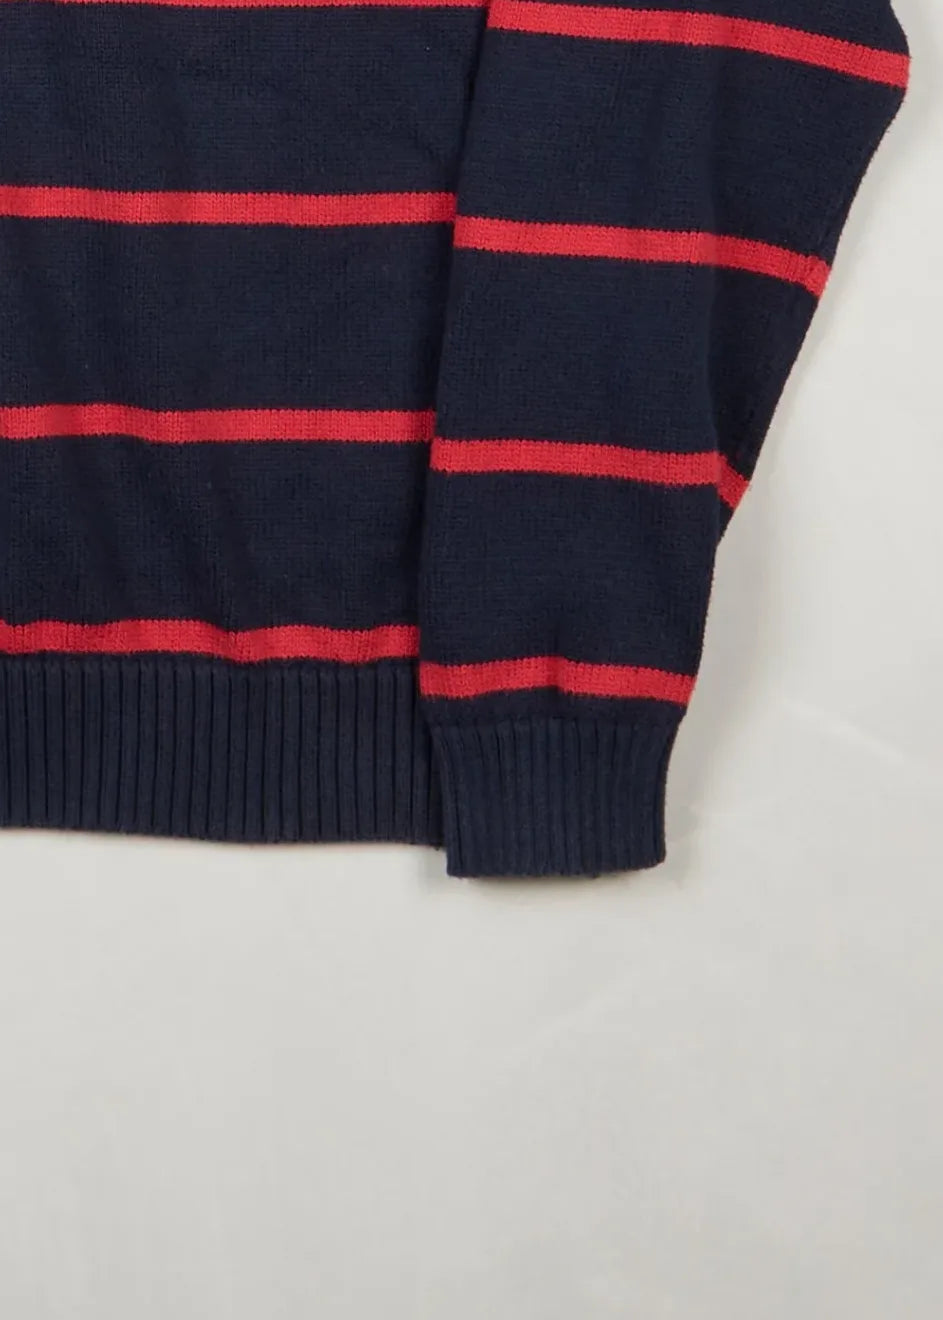 Ralph Lauren - Sweater (M) Bottom Right